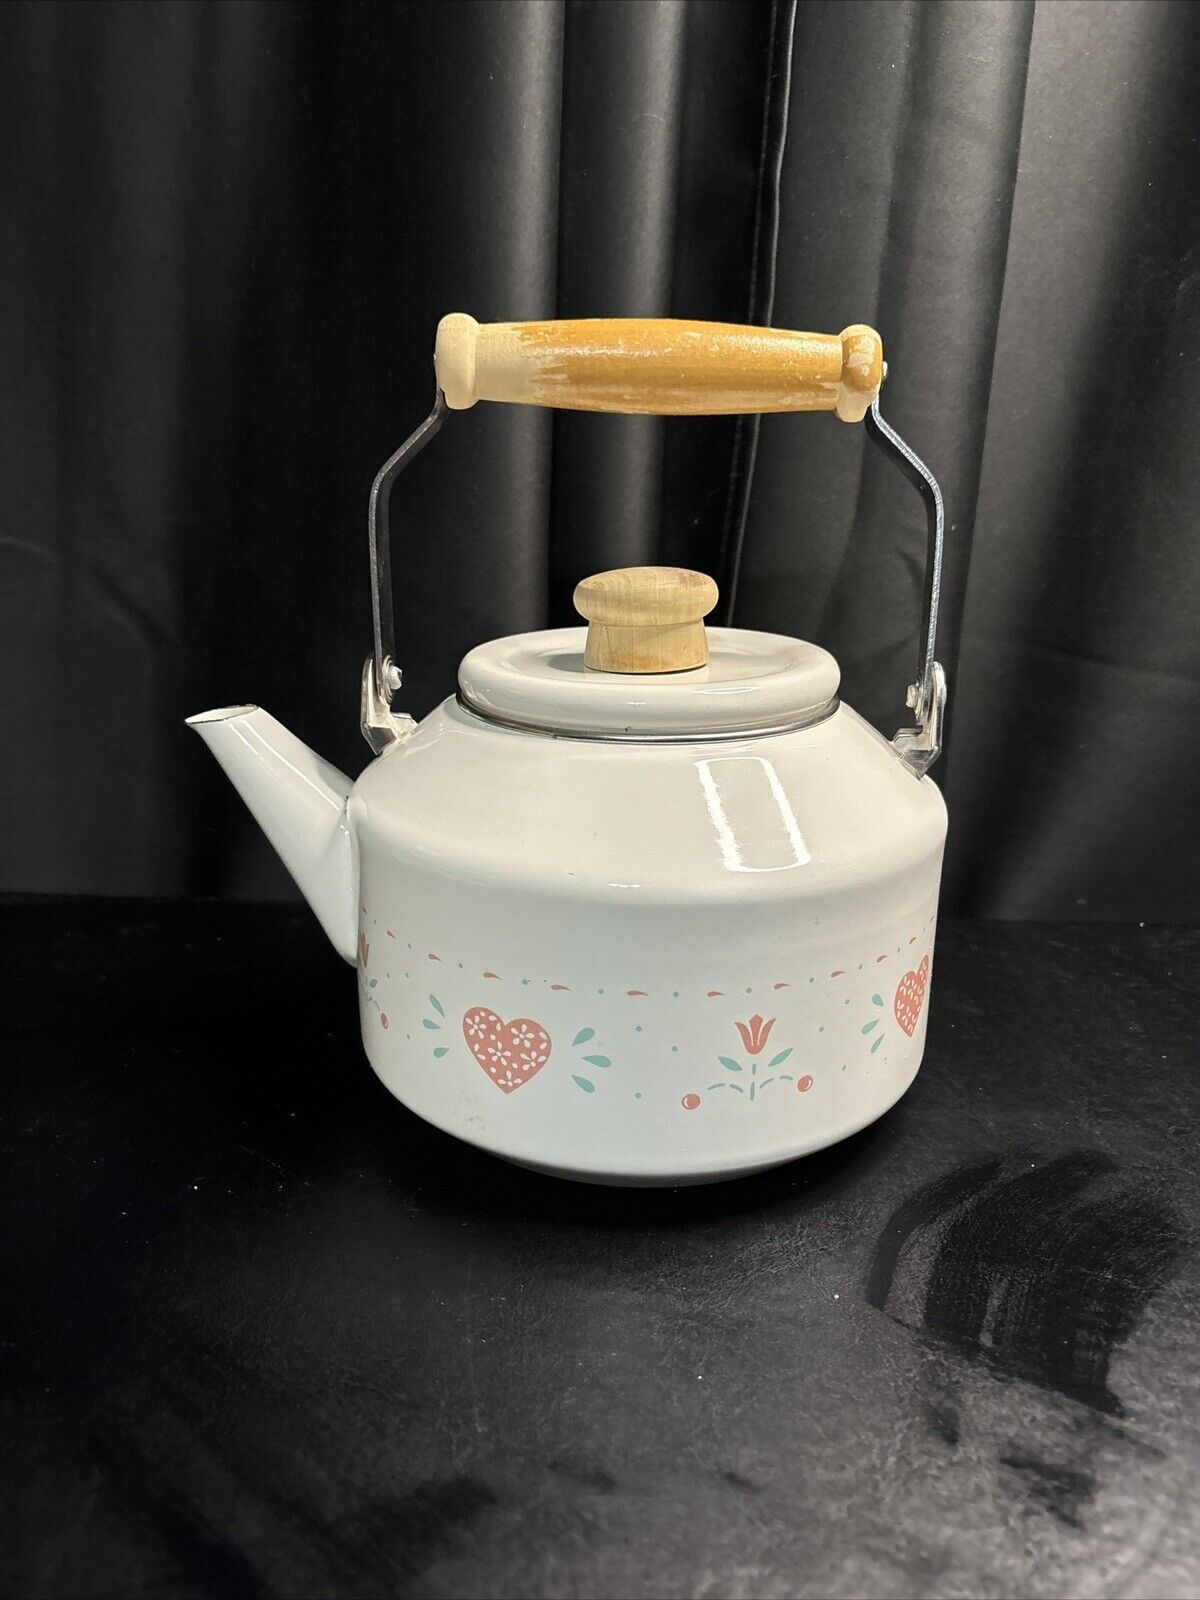 Tea pot Vintage Kitchen Collectible With Hearts Decorative